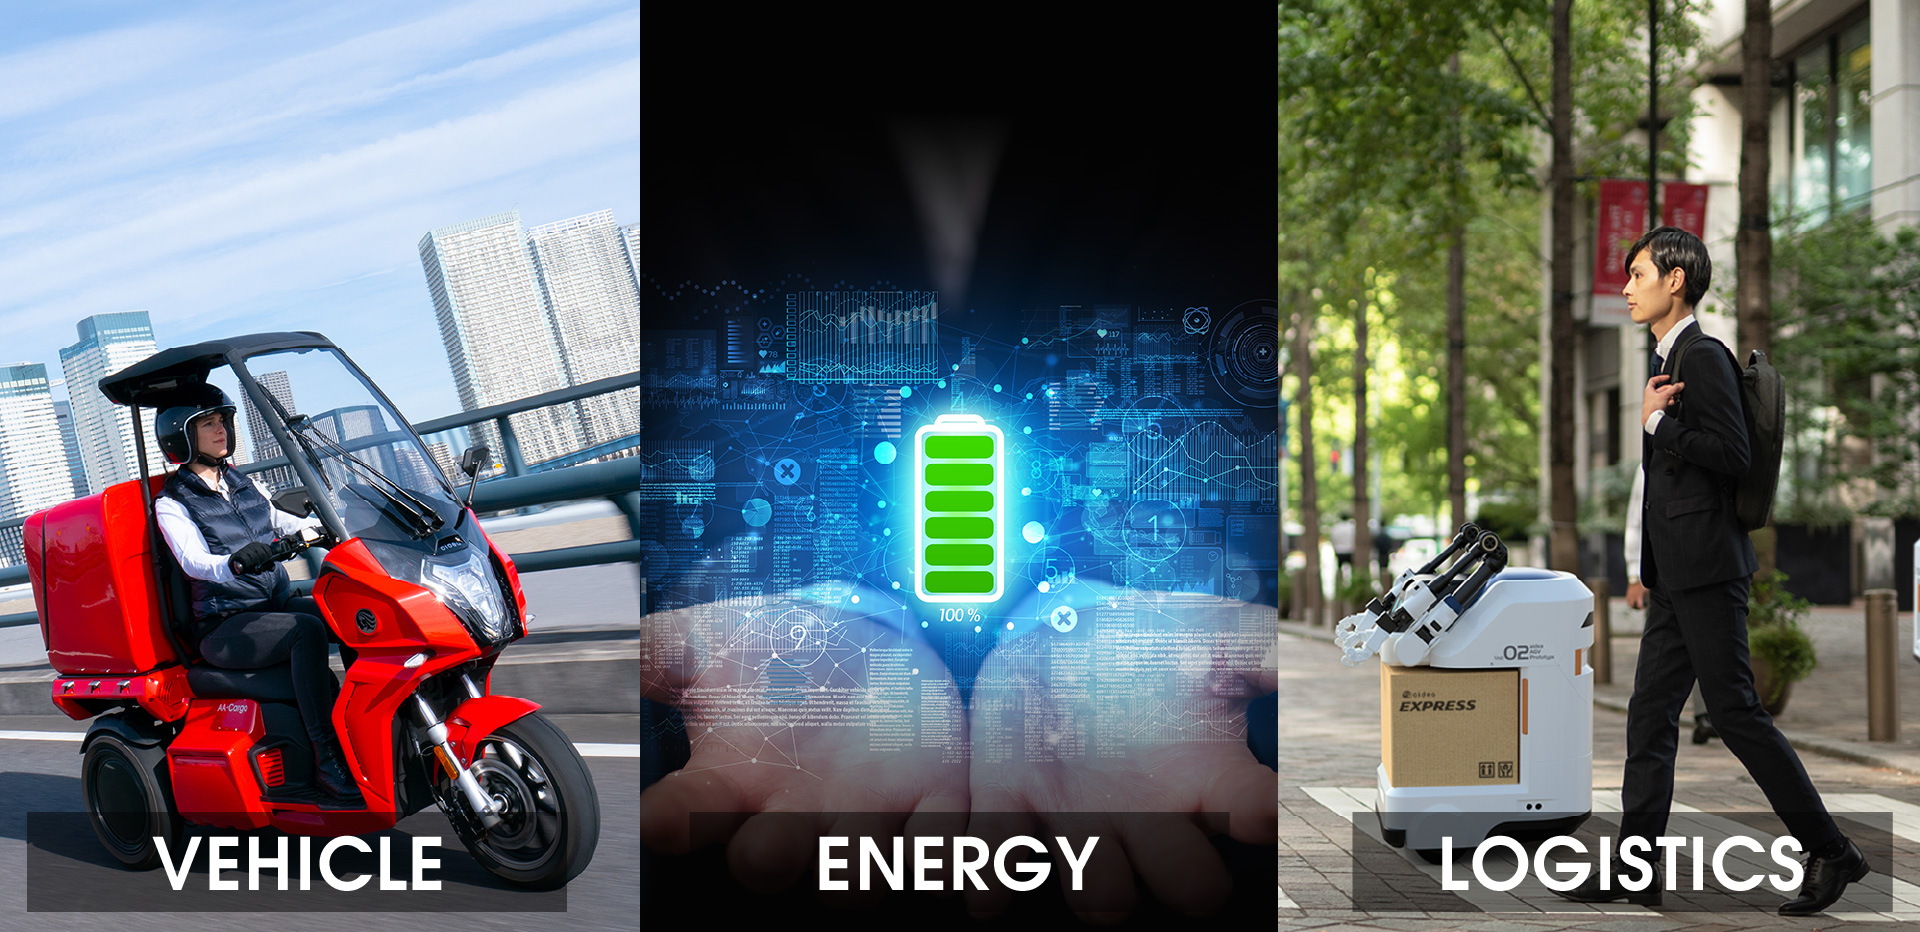 VEHICLE、ENERGY、LOGISTICSのイメージ。エネルギーを効率的に活用し、ヒトとモノの移動を自由にする